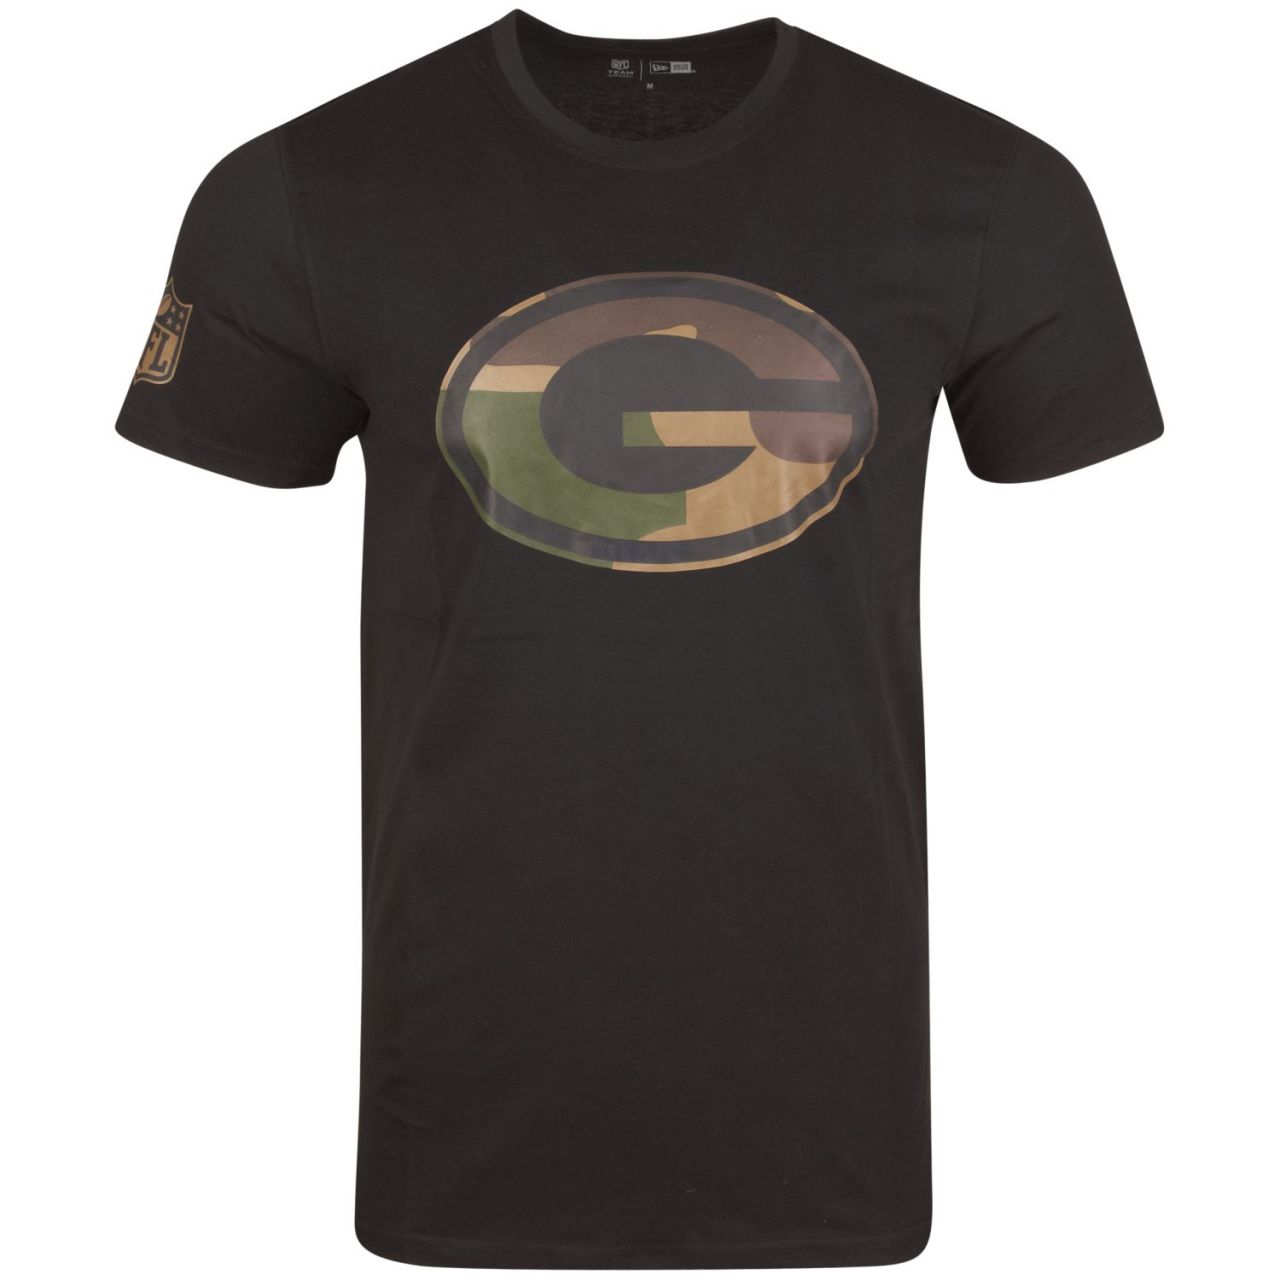 amfoo - New Era Shirt - NFL Green Bay Packers schwarz / wood camo